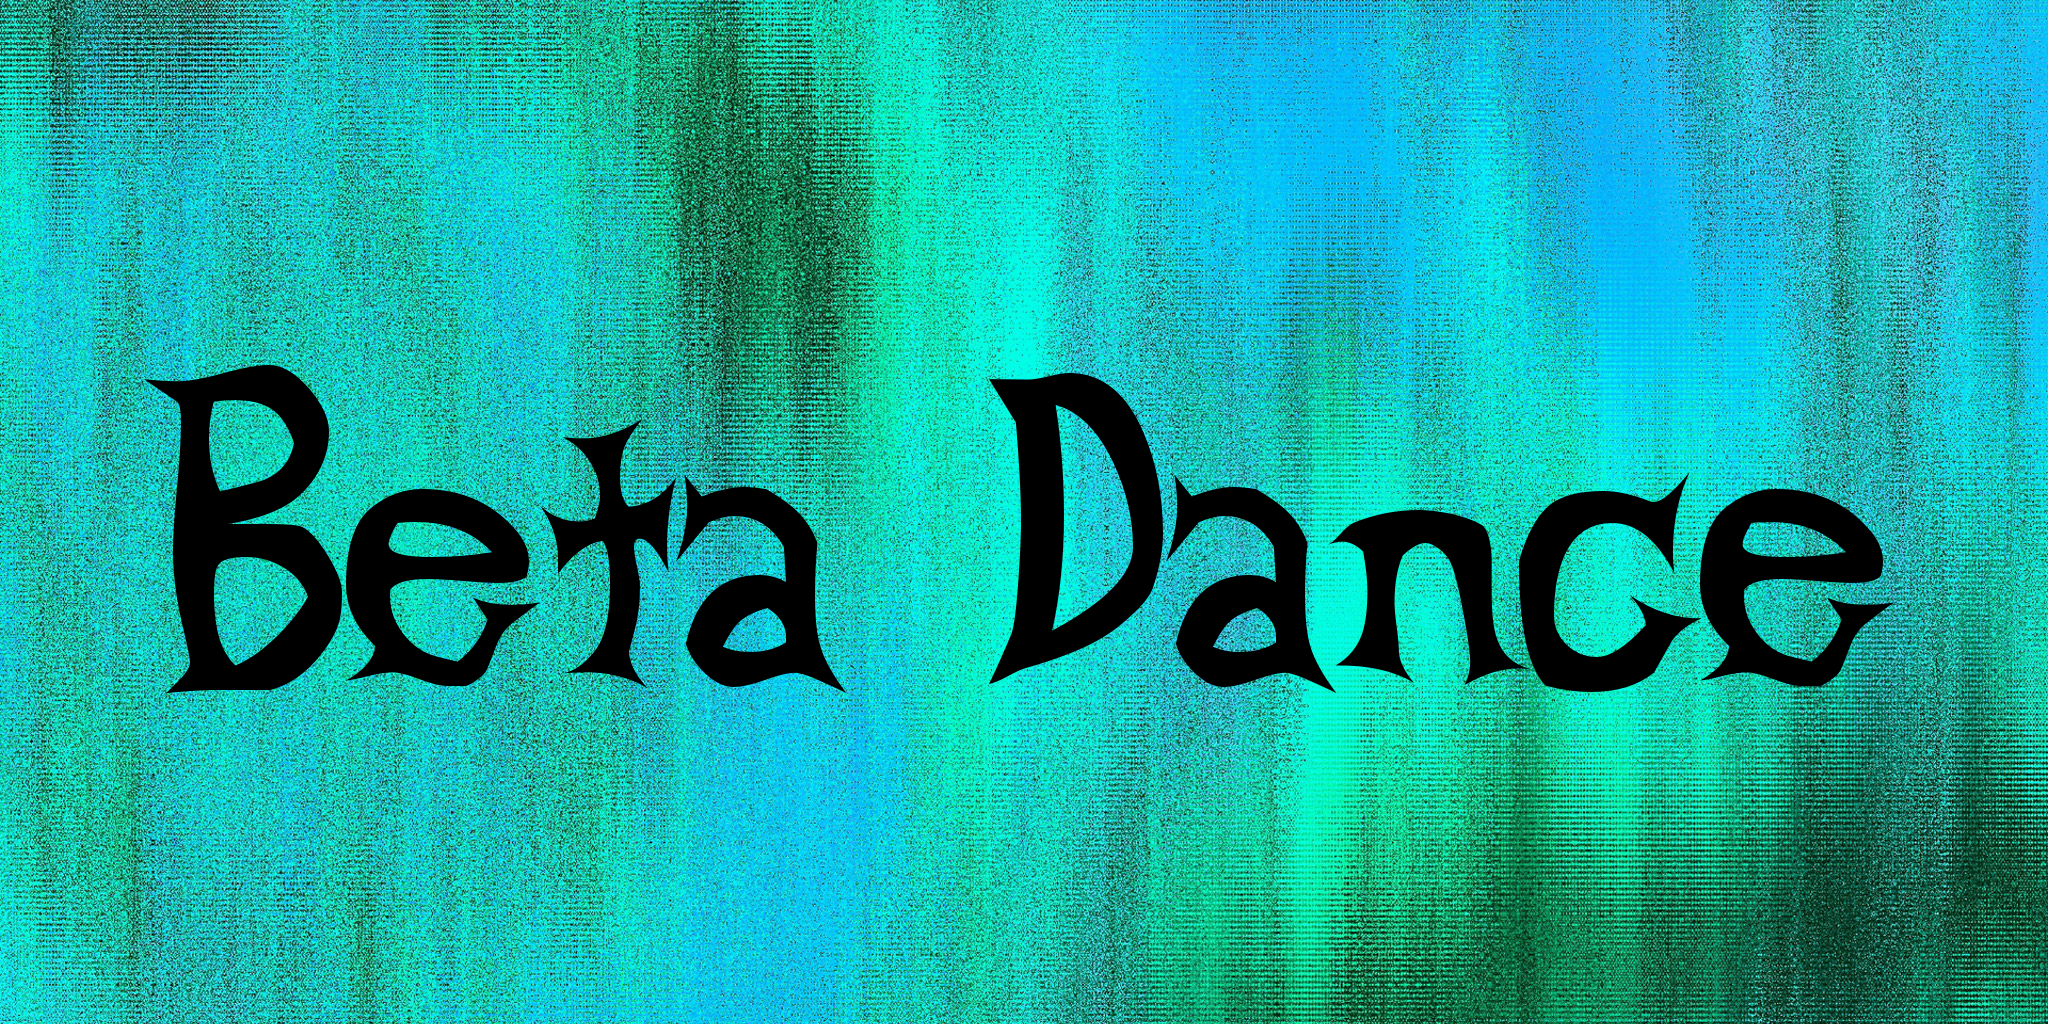 Beta Dance